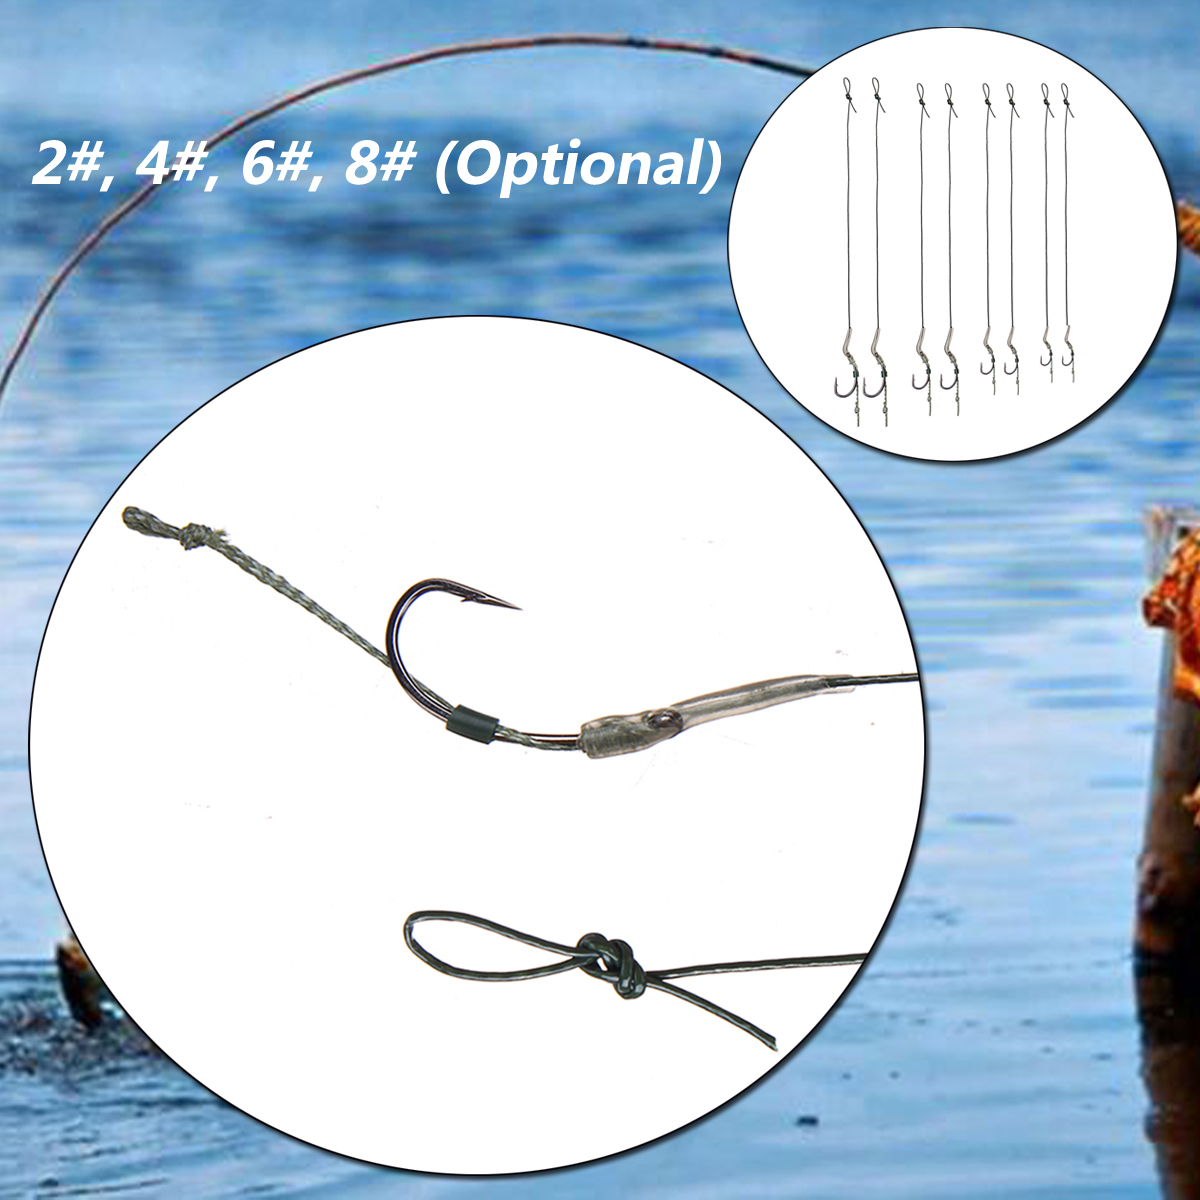 ZANLURE-CR-G004-MOSODO-2PCS-2-4-6-8-High-Carbon-Steel-Fishing-Hook-Freshwater-Fishing-Hooks-1336318-2